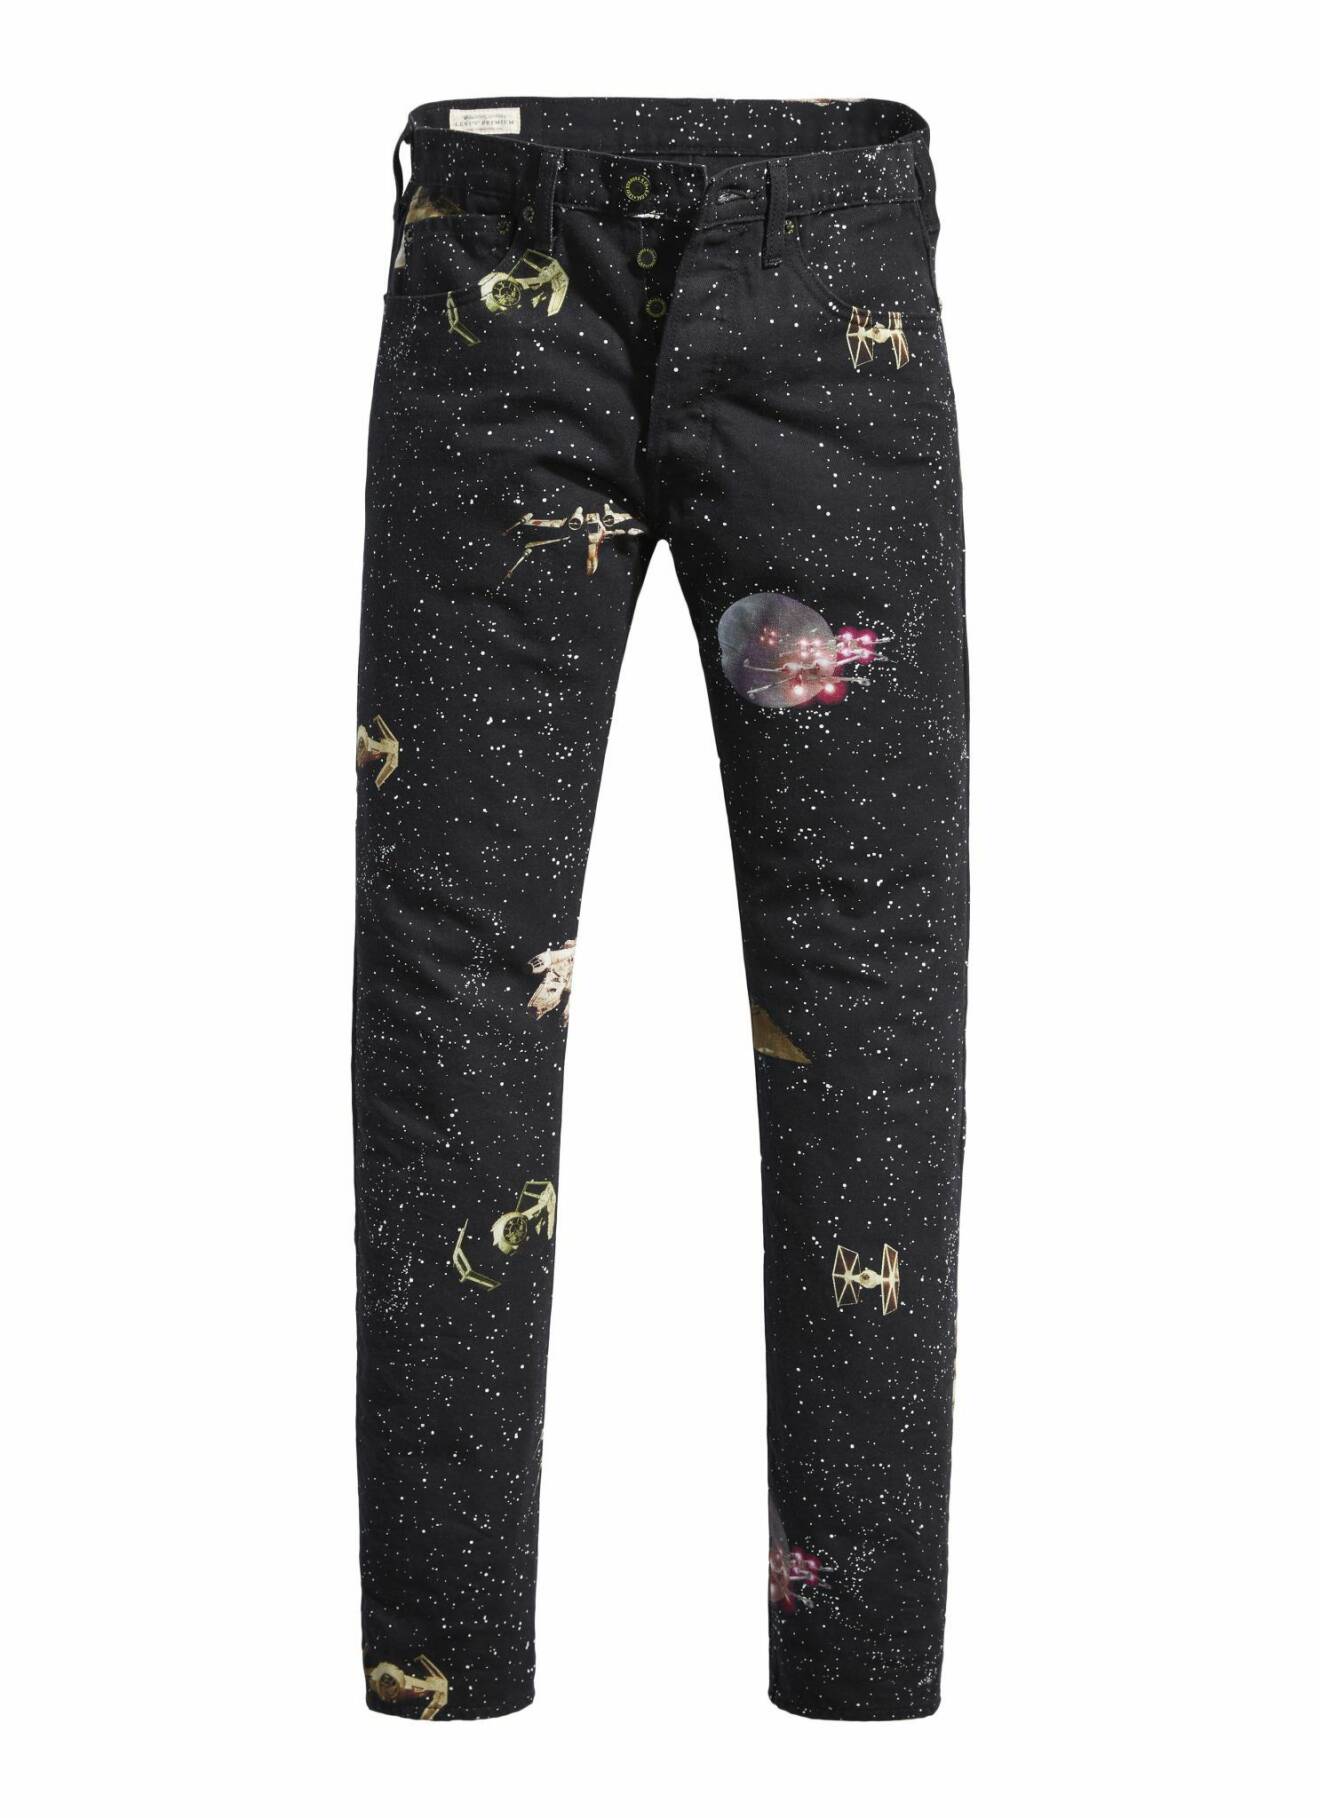 Levis kollektion med Star Wars jeans